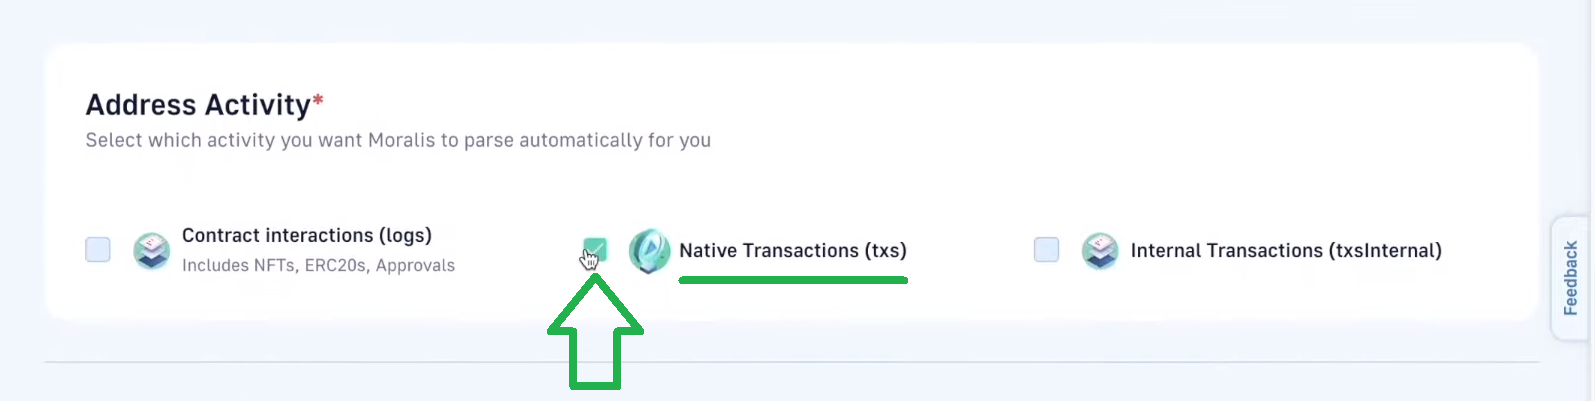 Checmarking the Native Transaction option.